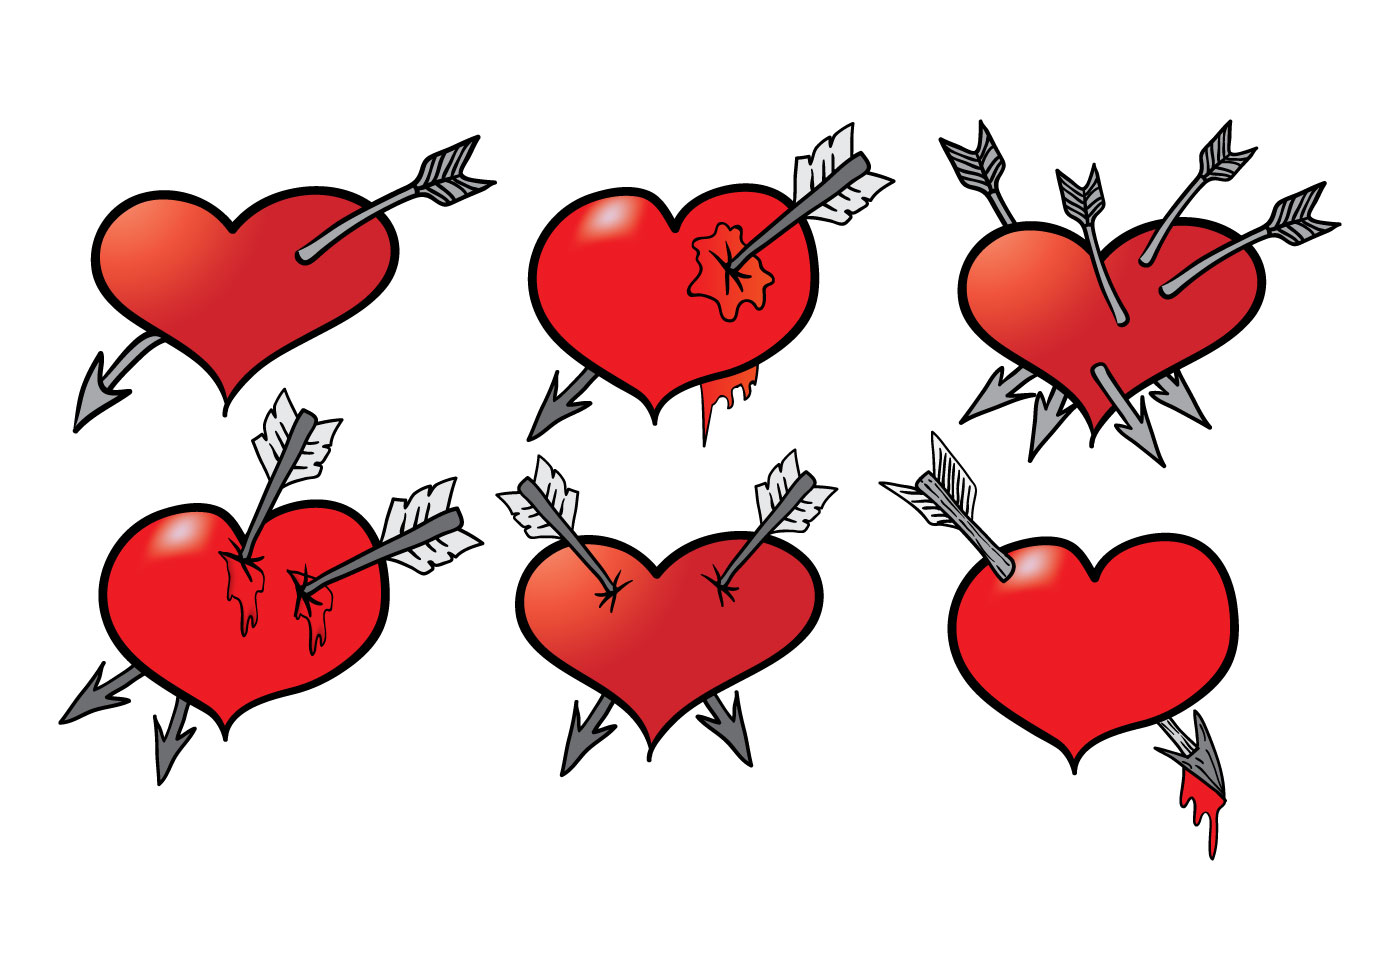 Download Hand Drawn Arrow Through Heart Vectors - Download Free Vector Art, Stock Graphics & Images